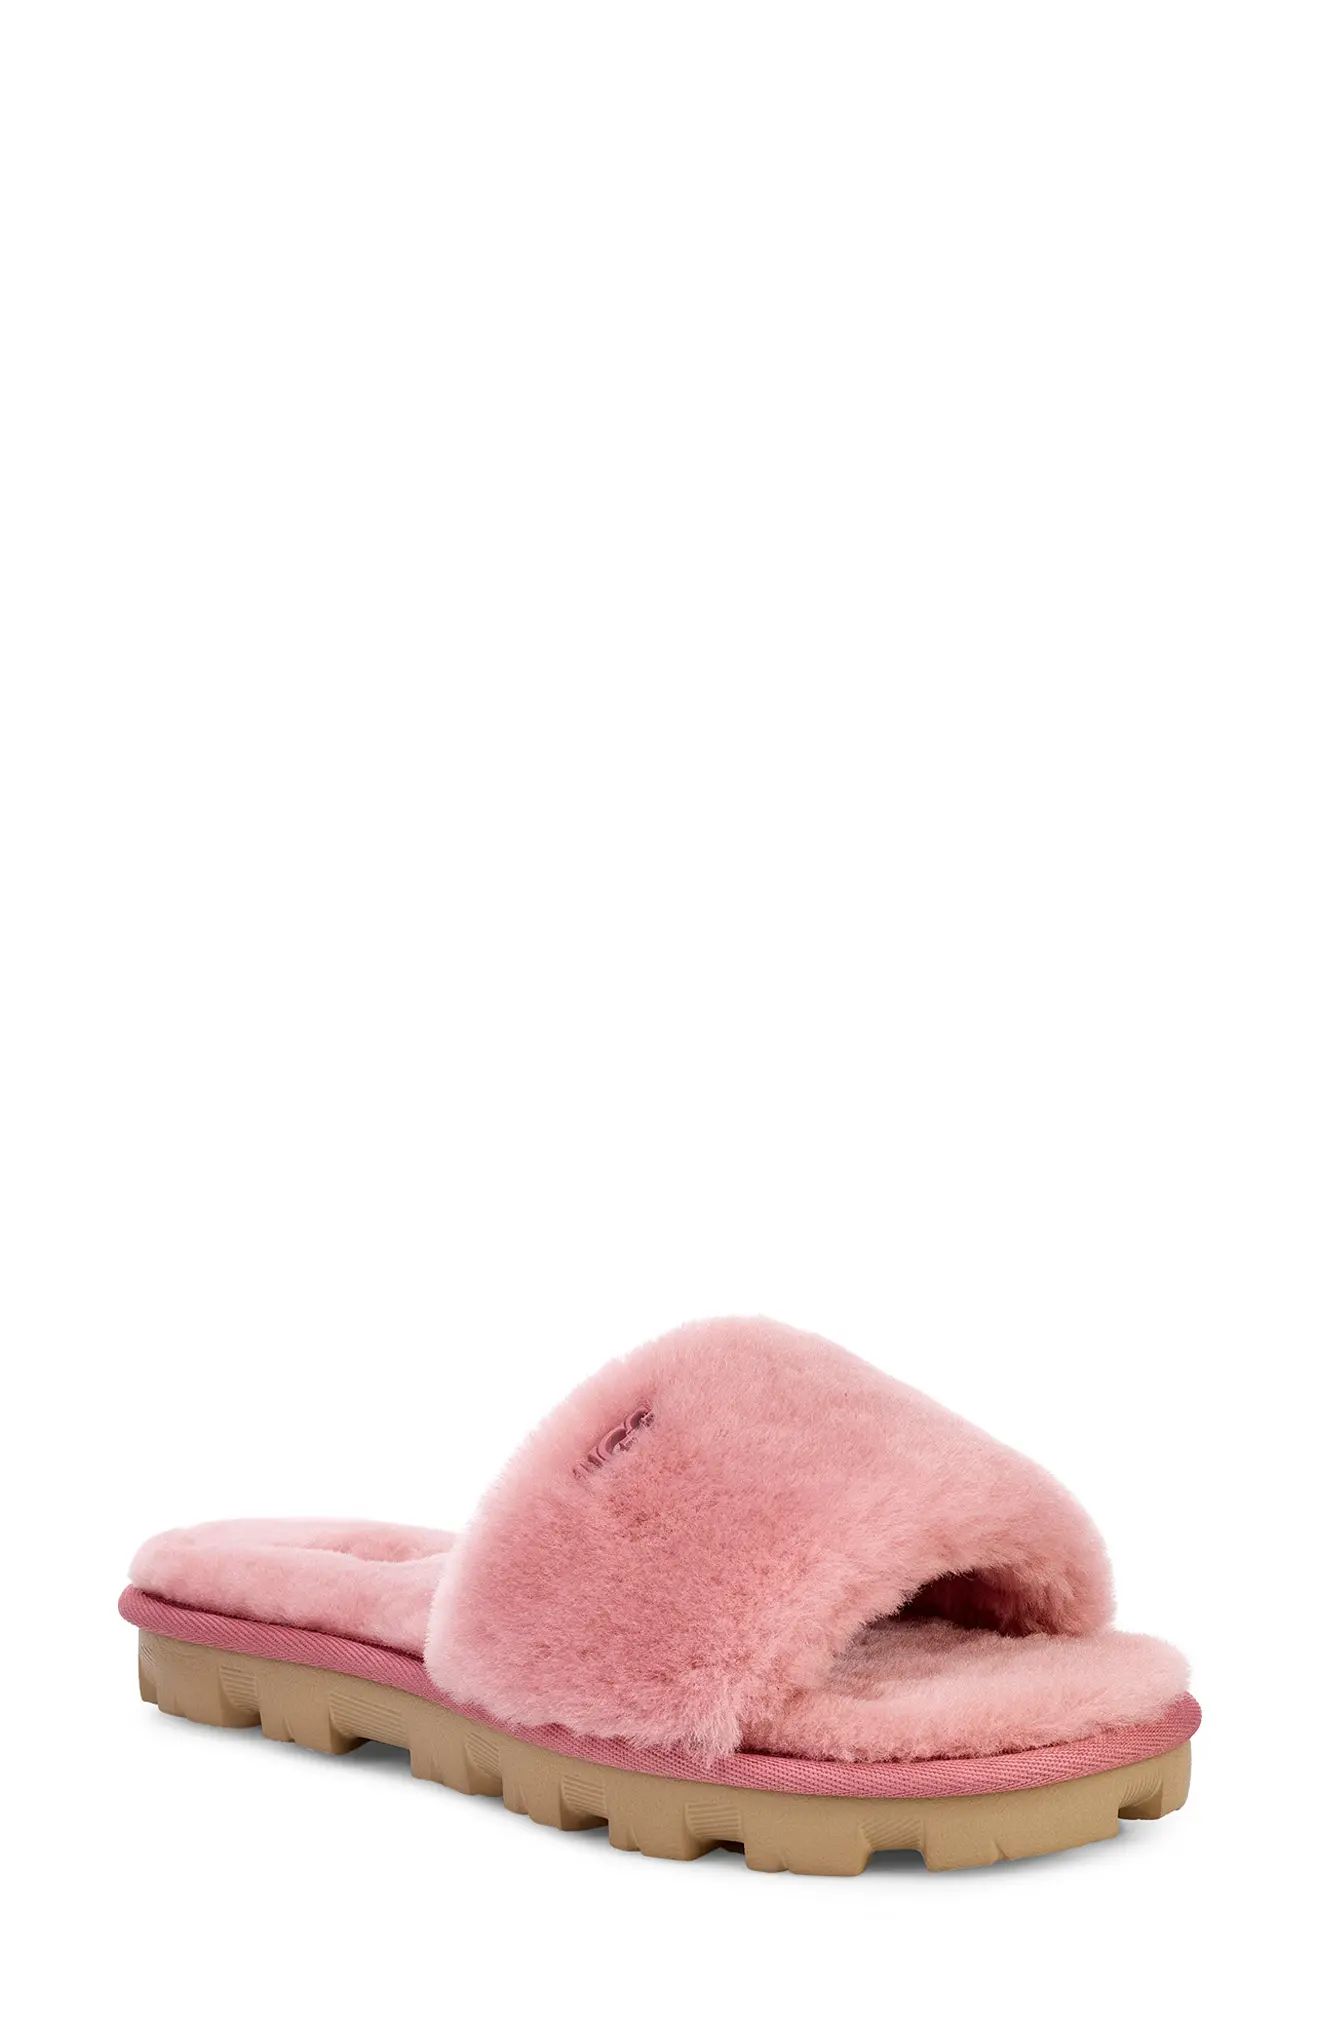 Women's Ugg Cosette Genuine Shearling Slipper, Size 9 M - Pink | Nordstrom